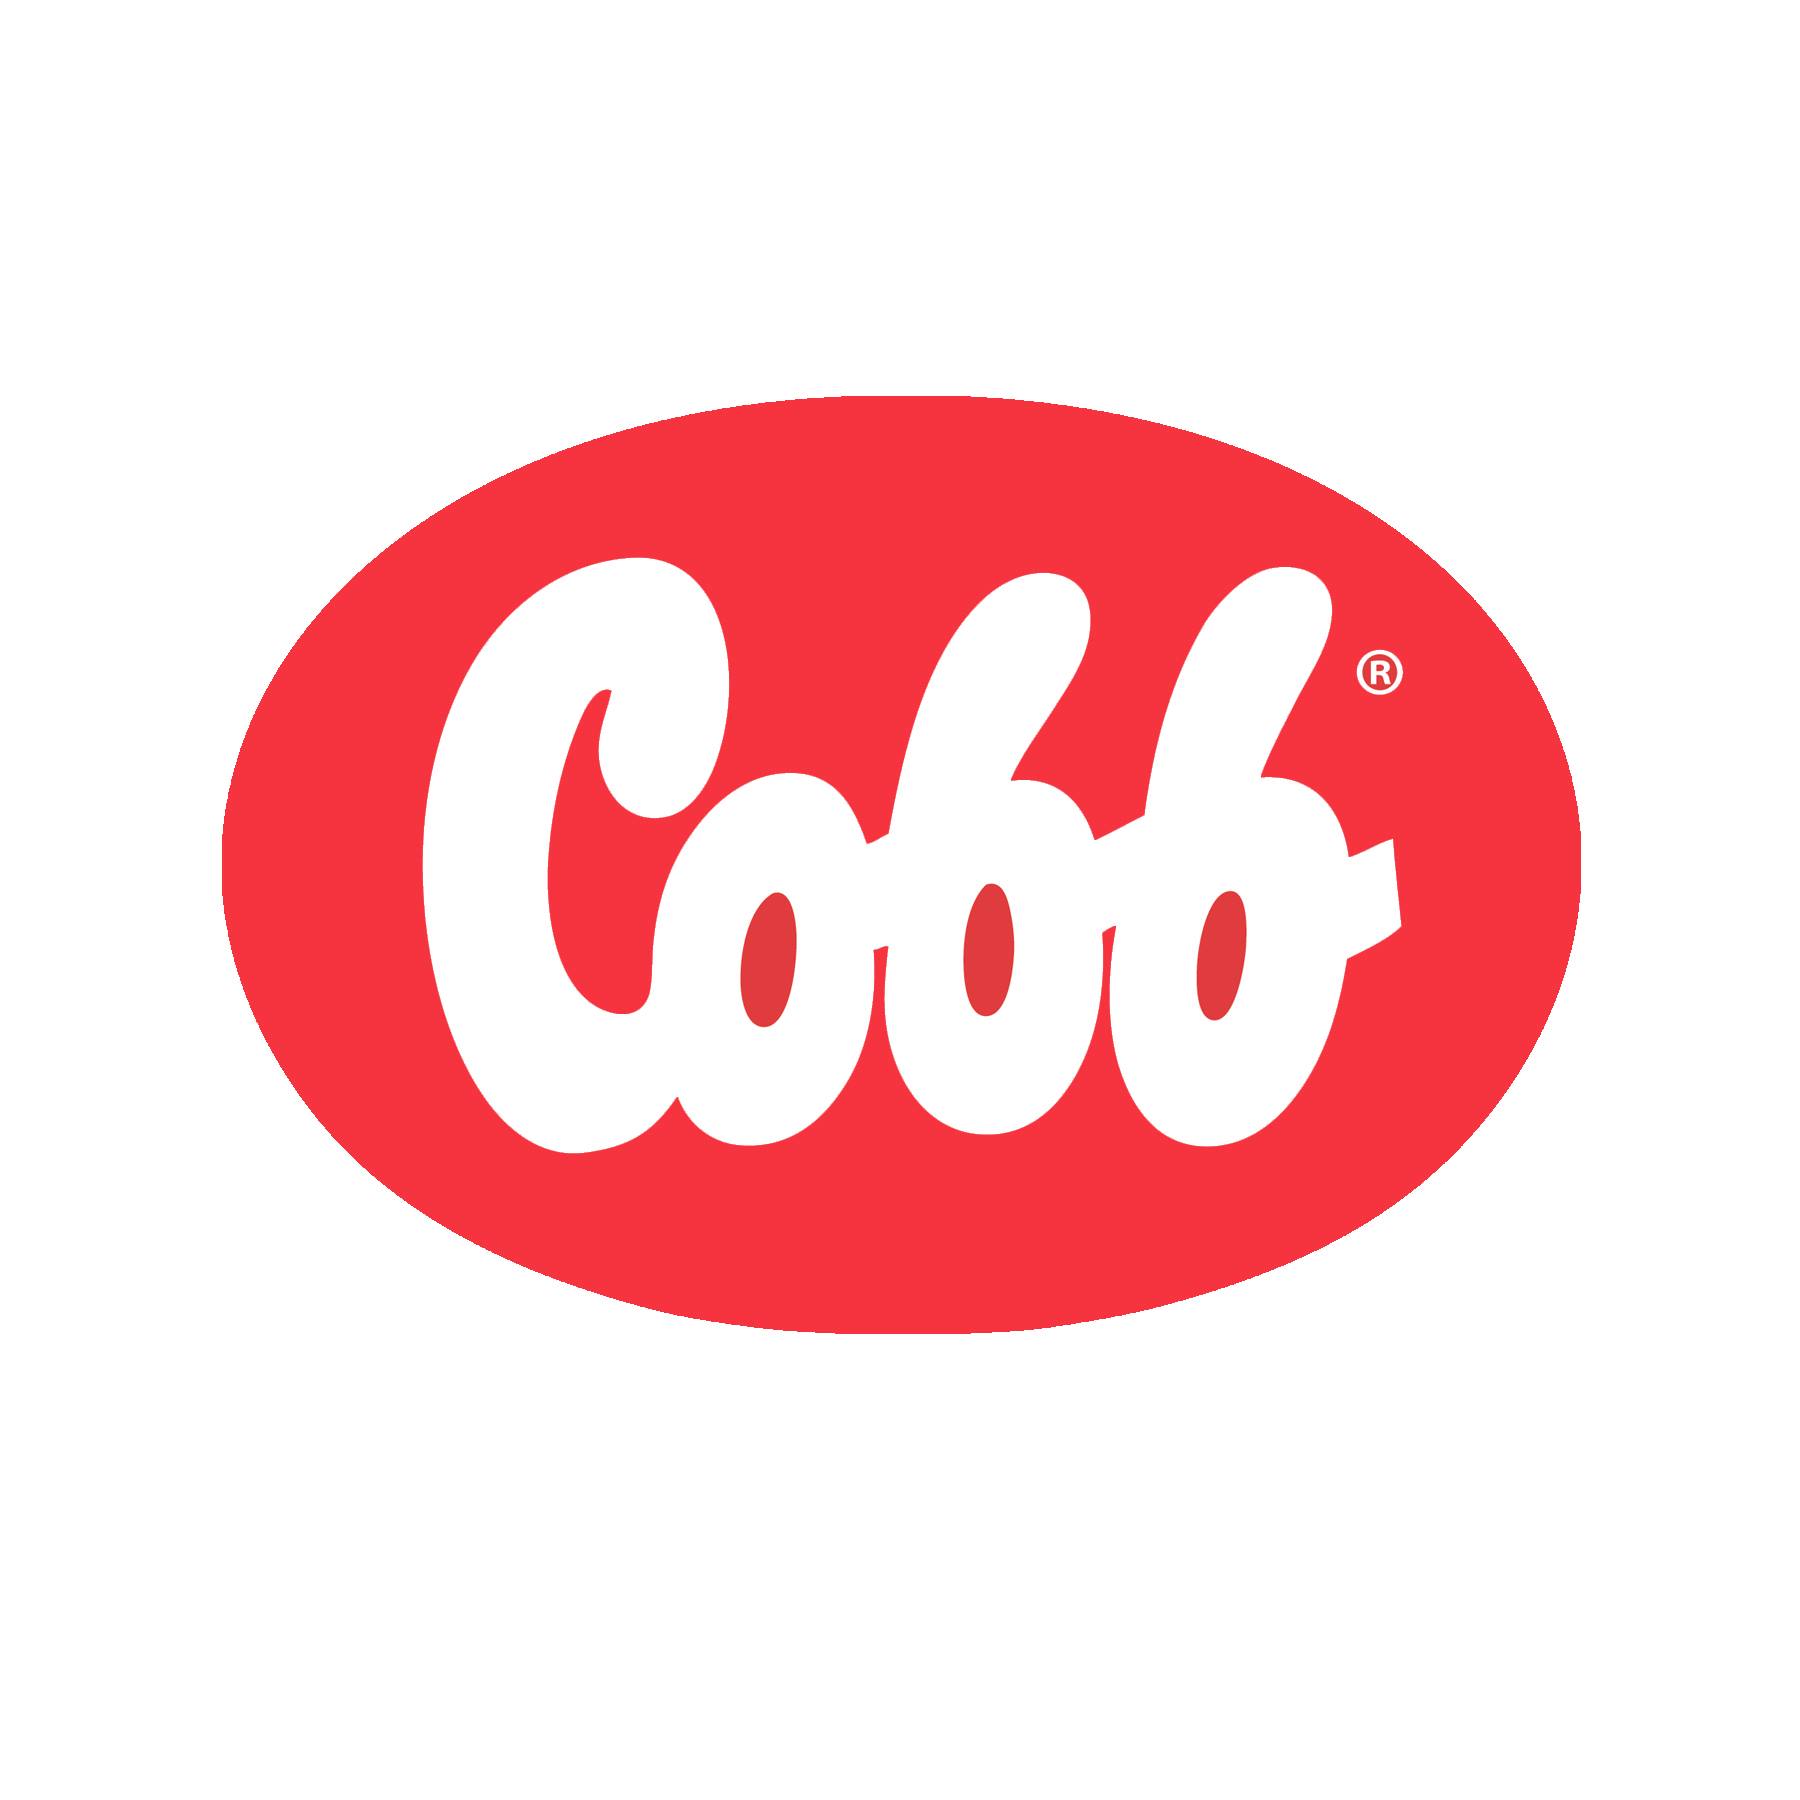 Business logo of Cobb-Vantress Inc